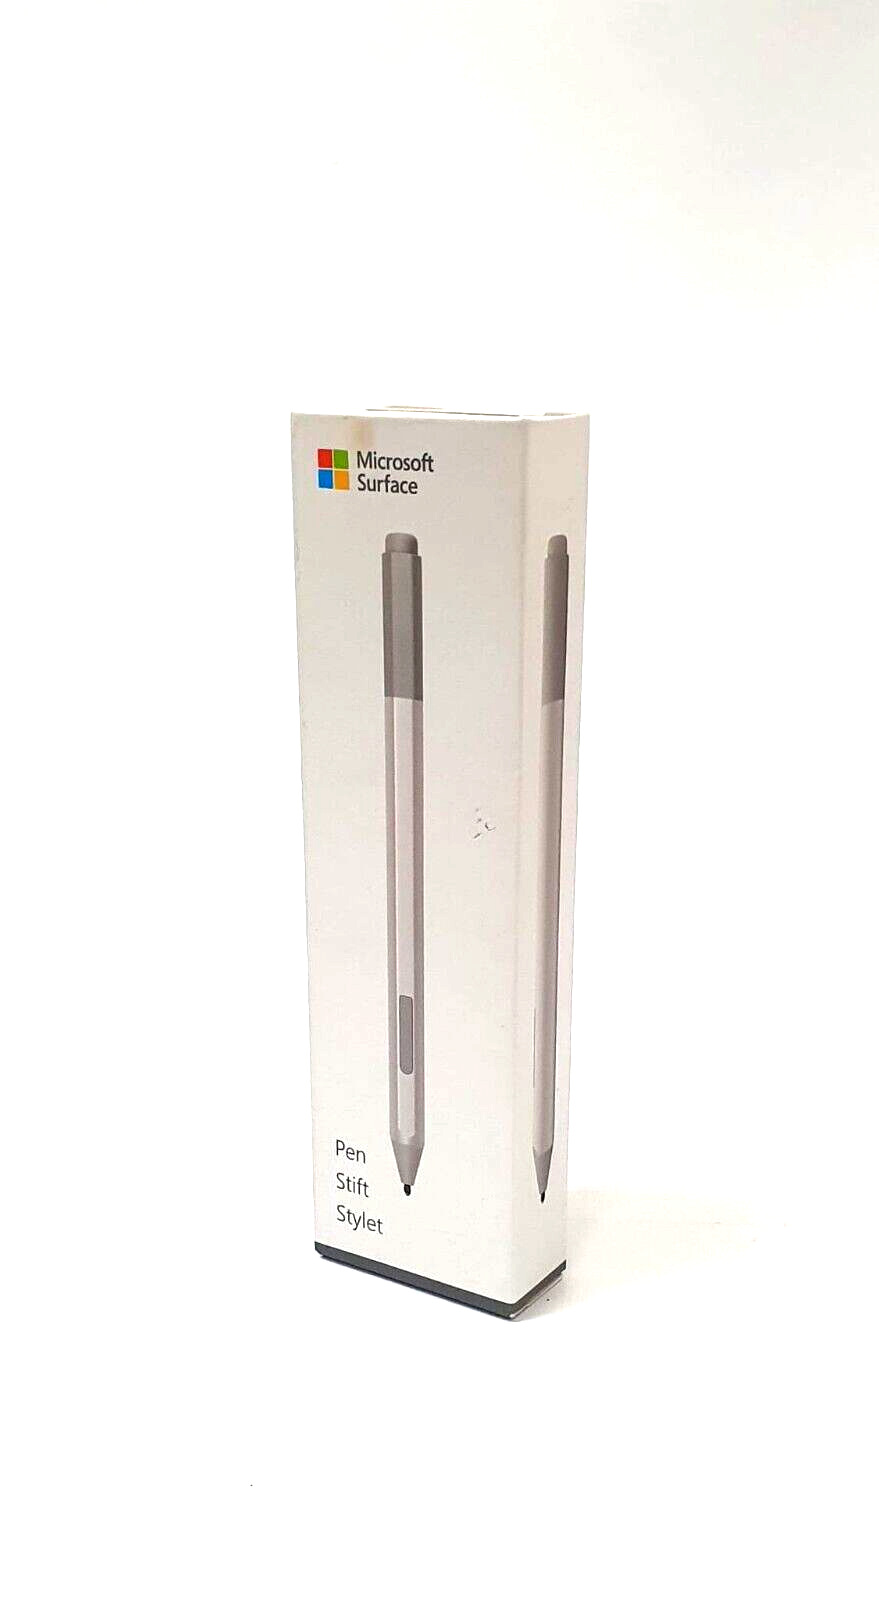 Genuine-Microsoft-Surface-Pro-Stylus-Pen-Stift-Stylet-Model-1776-Silver-165637538248